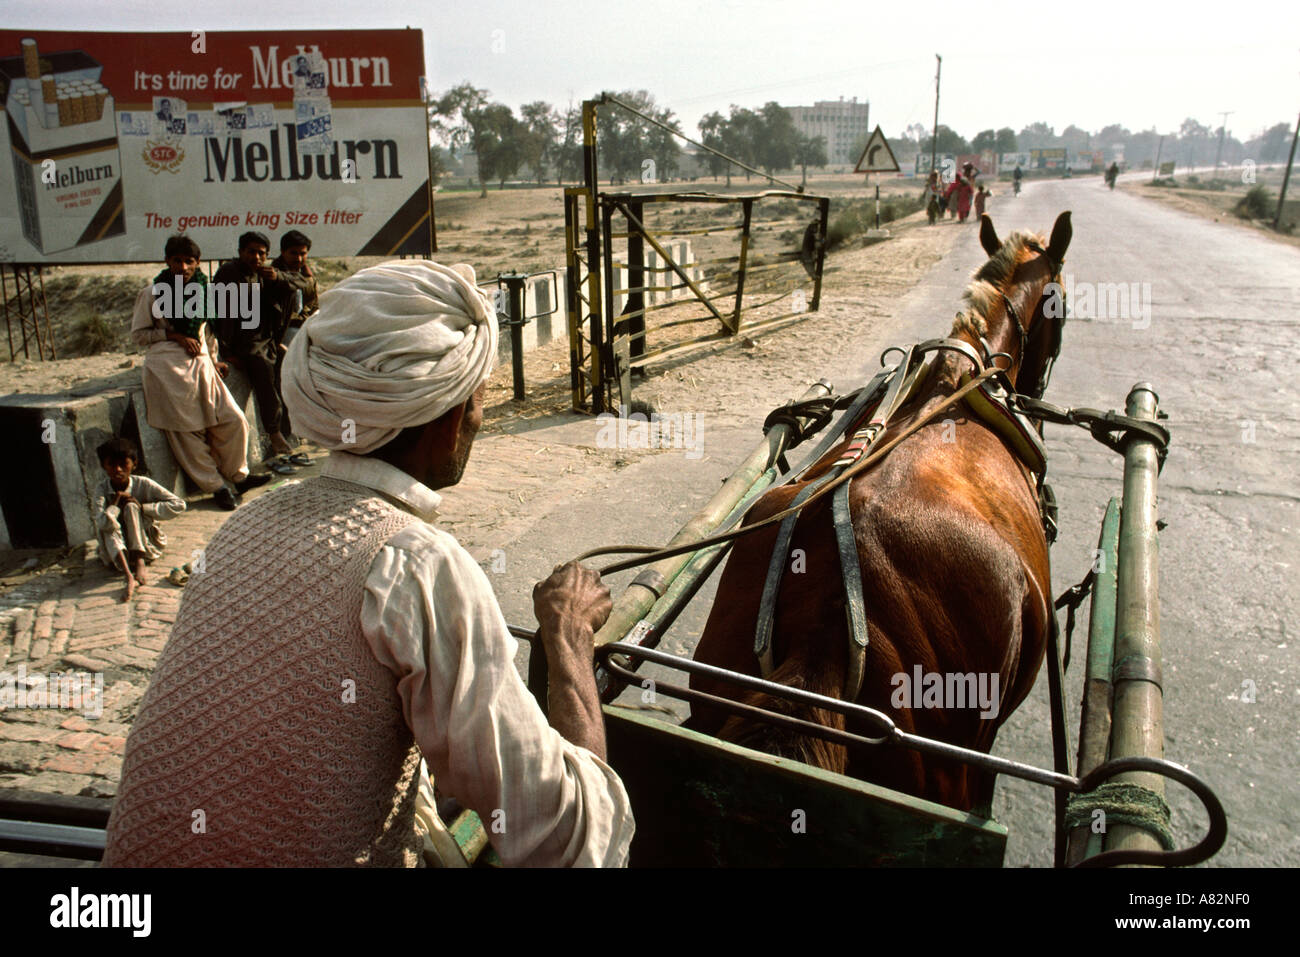 Pakistan South Punjab Bahawalpur horse cart driver passing Marlboro cigarette copy Melburn advertisement passengers view Stock Photo